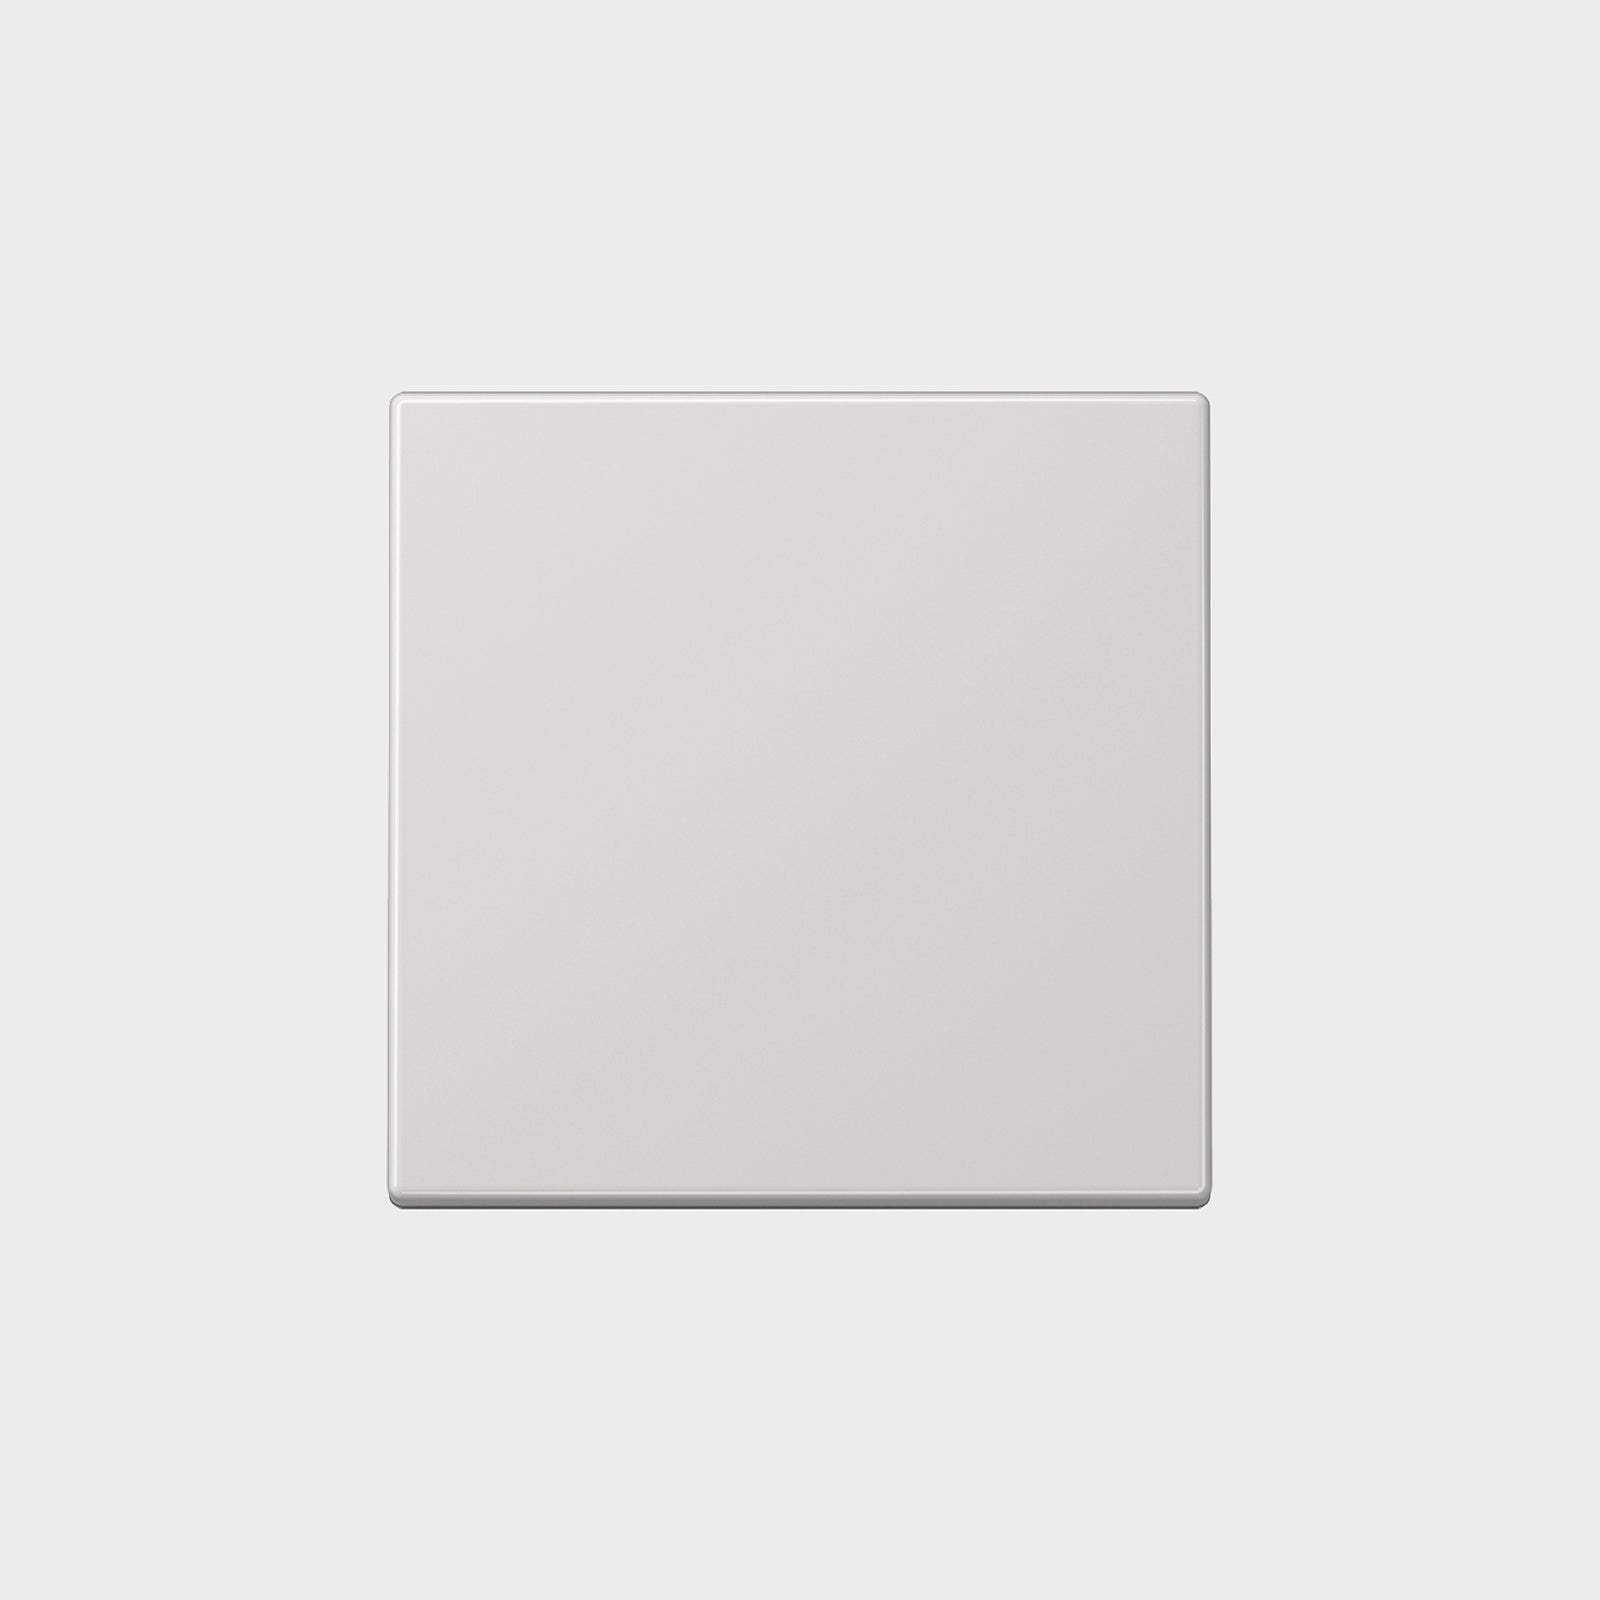 Ls990 (Plastic) Light Grey Cover